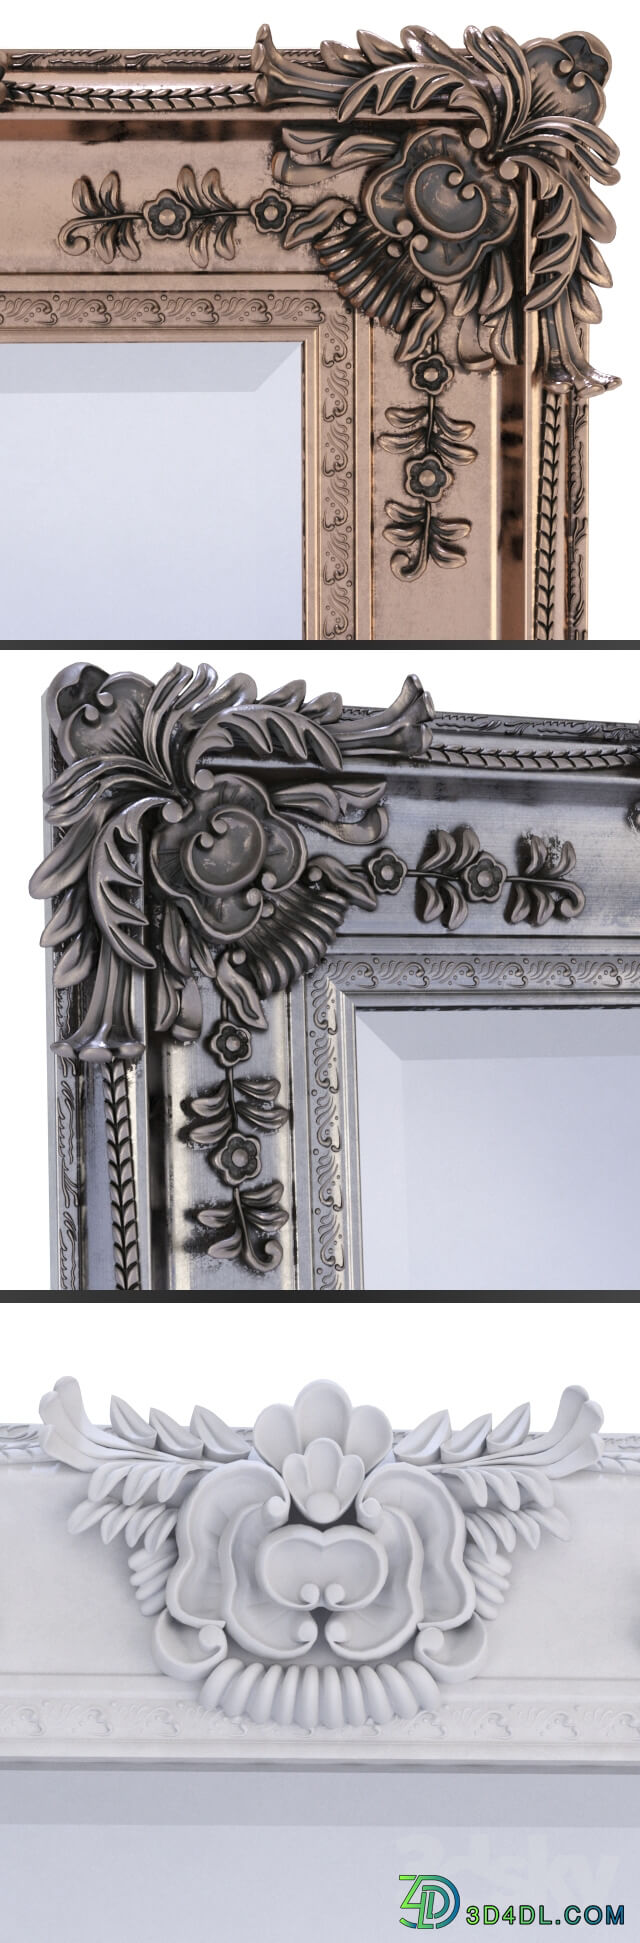 Astoria Grand Beaston Leaner Mirror